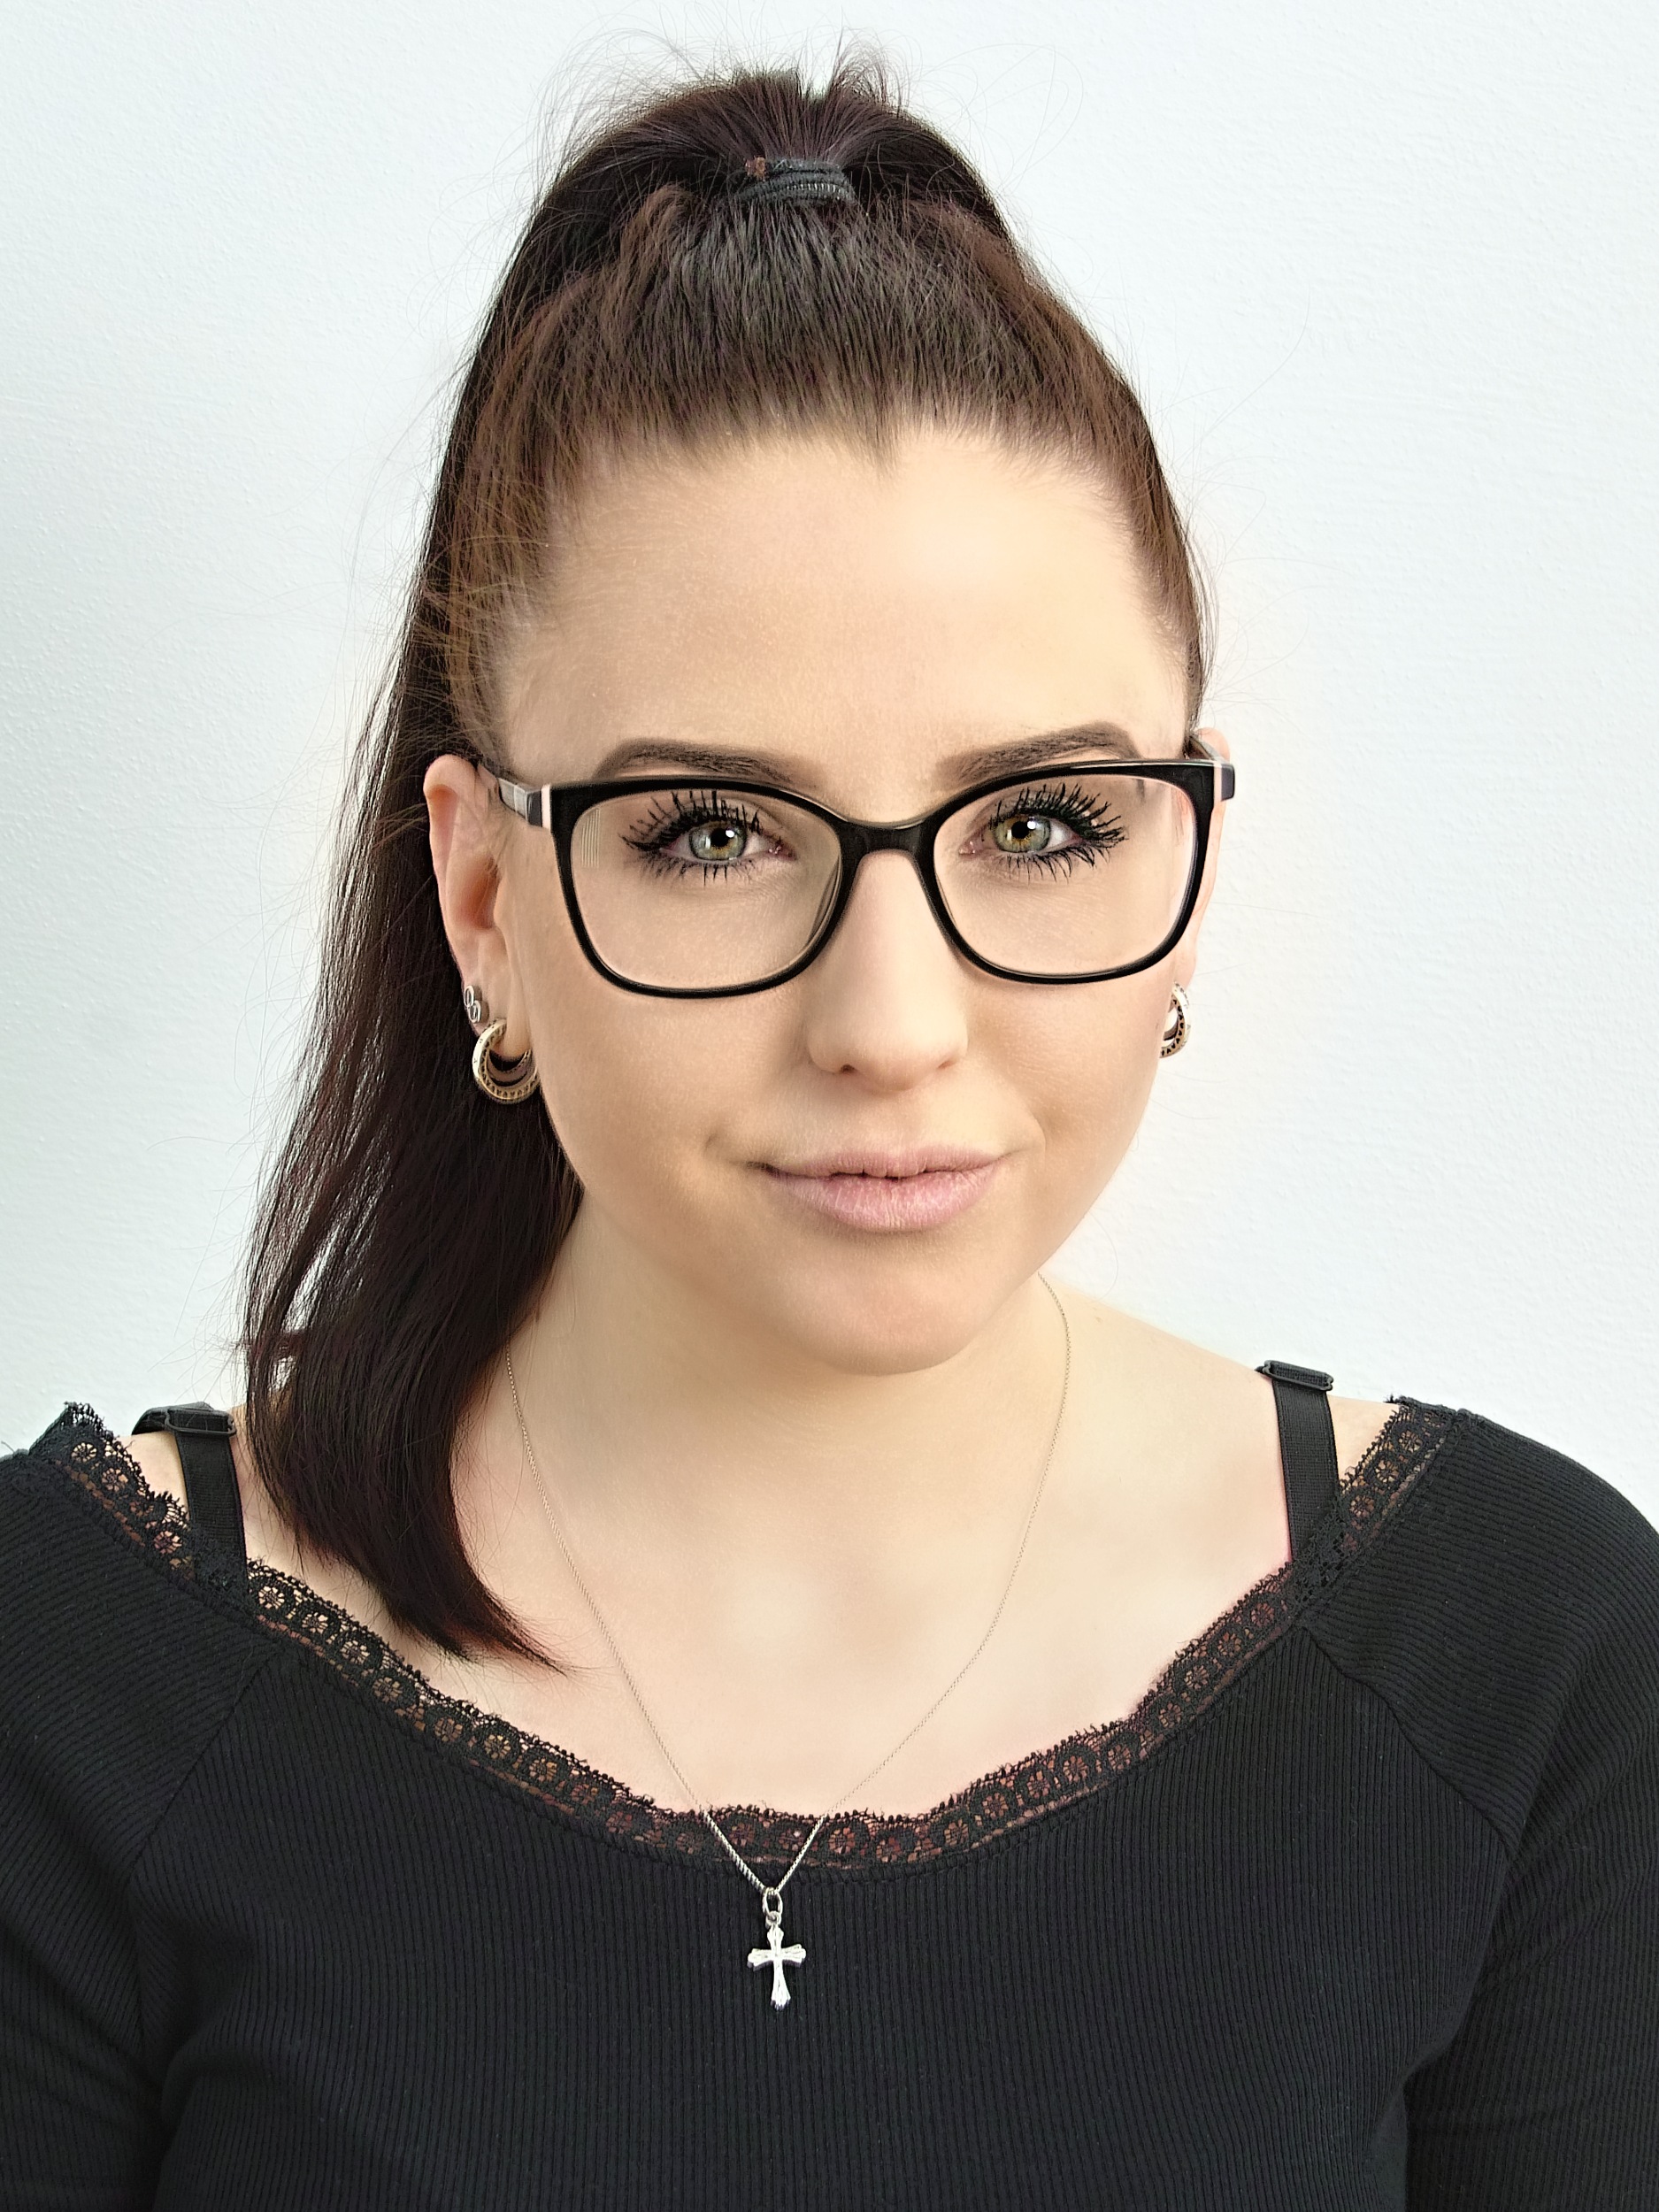 Věra Karásková